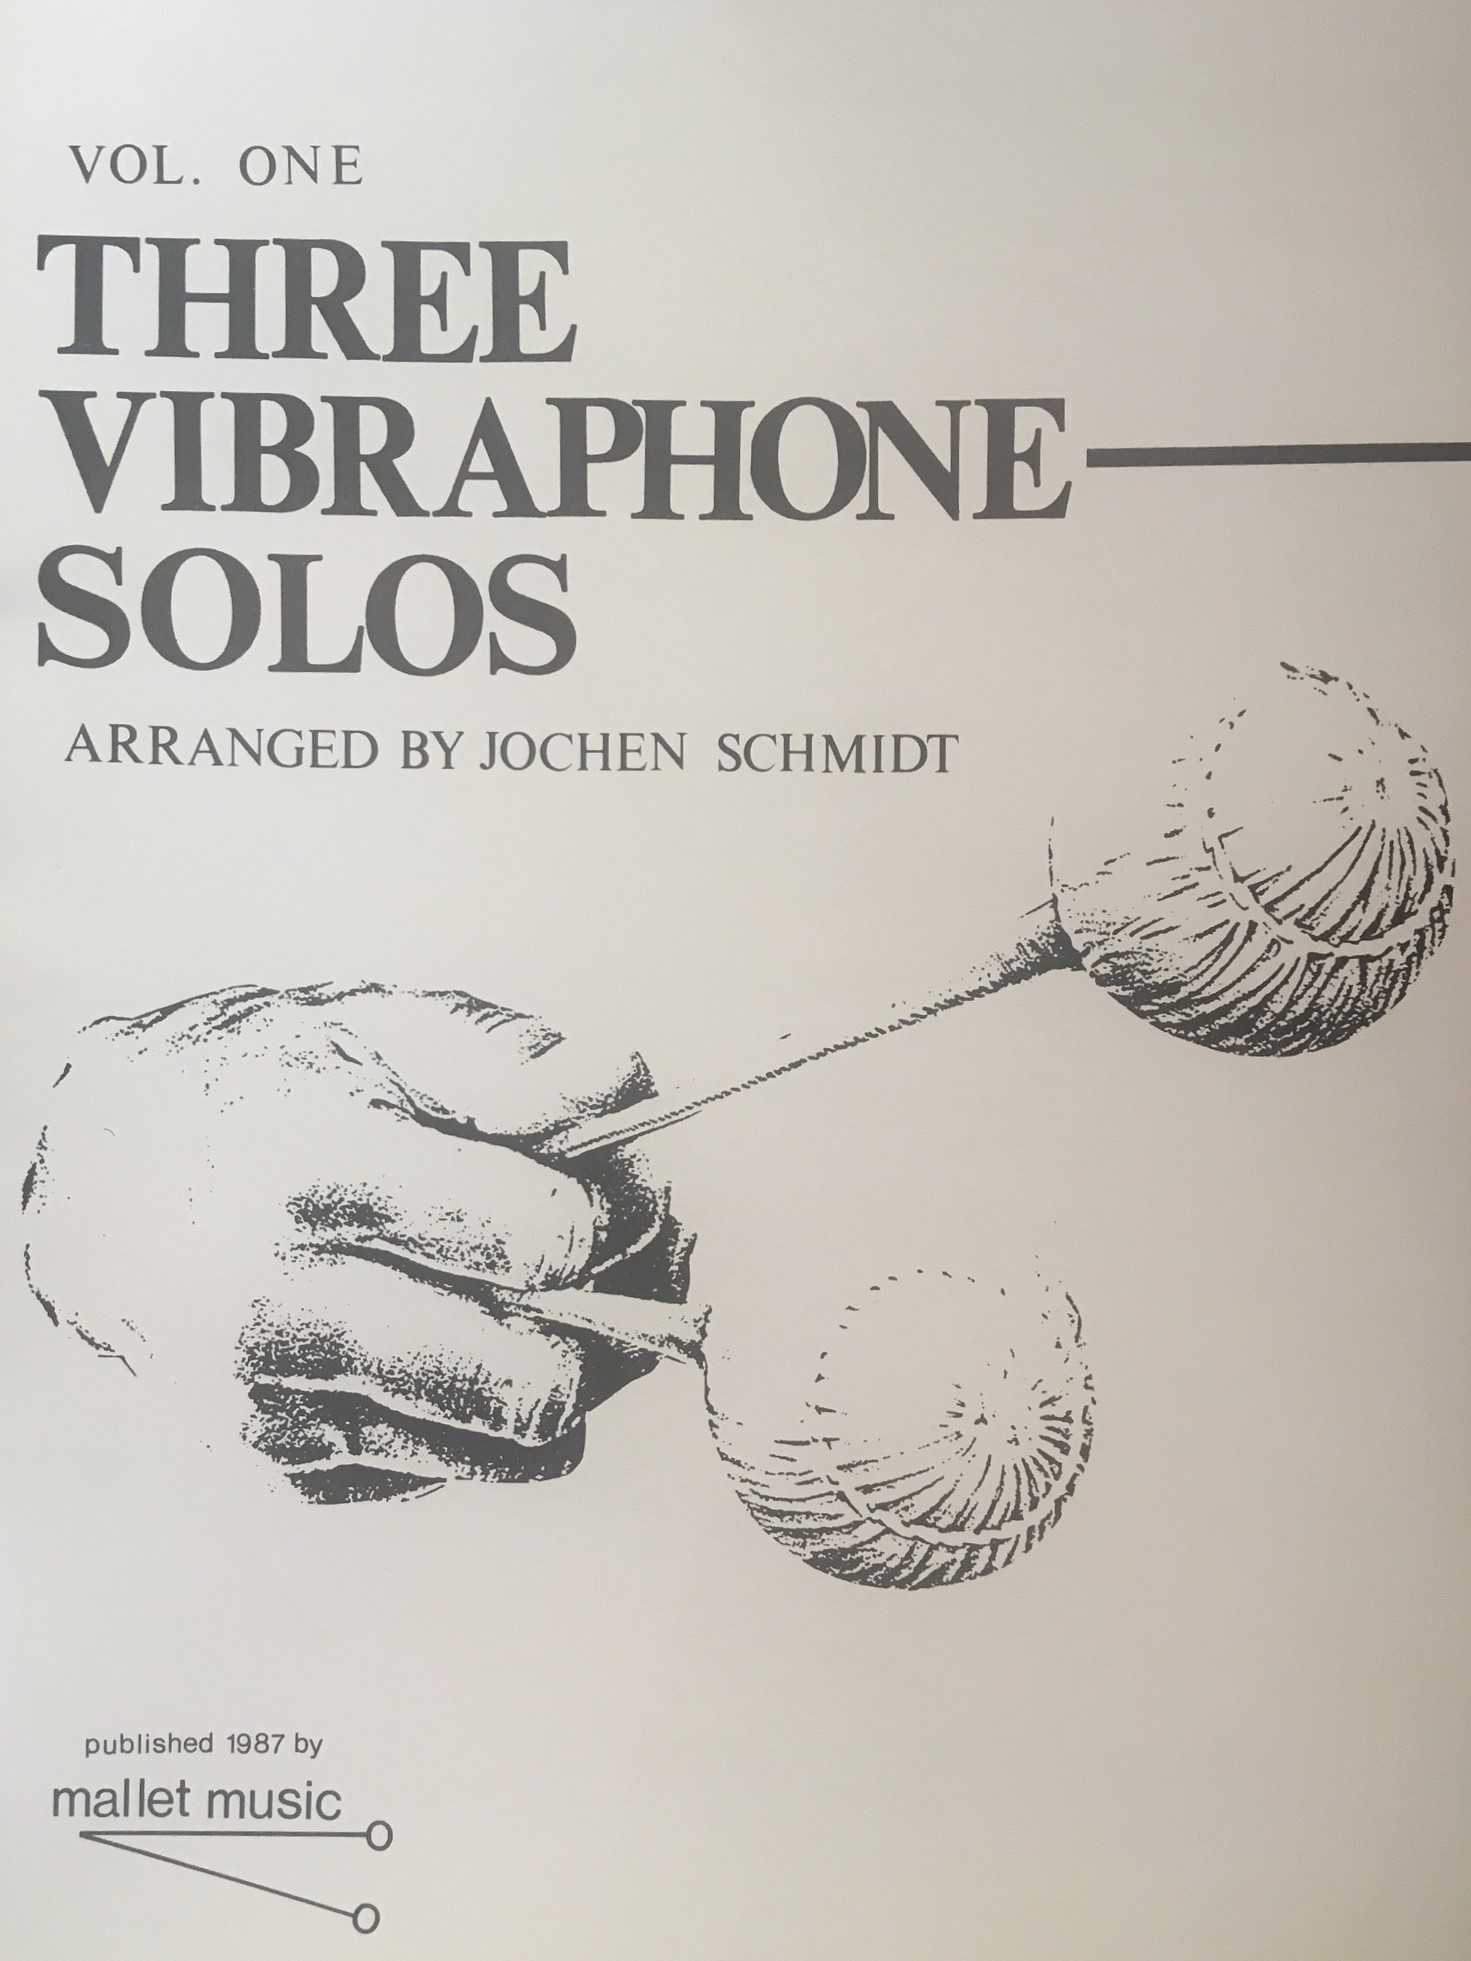 Three Vibraphone Solos Vol. 1 by Chick Corea & Jarrett arr. Jochen Schmidt